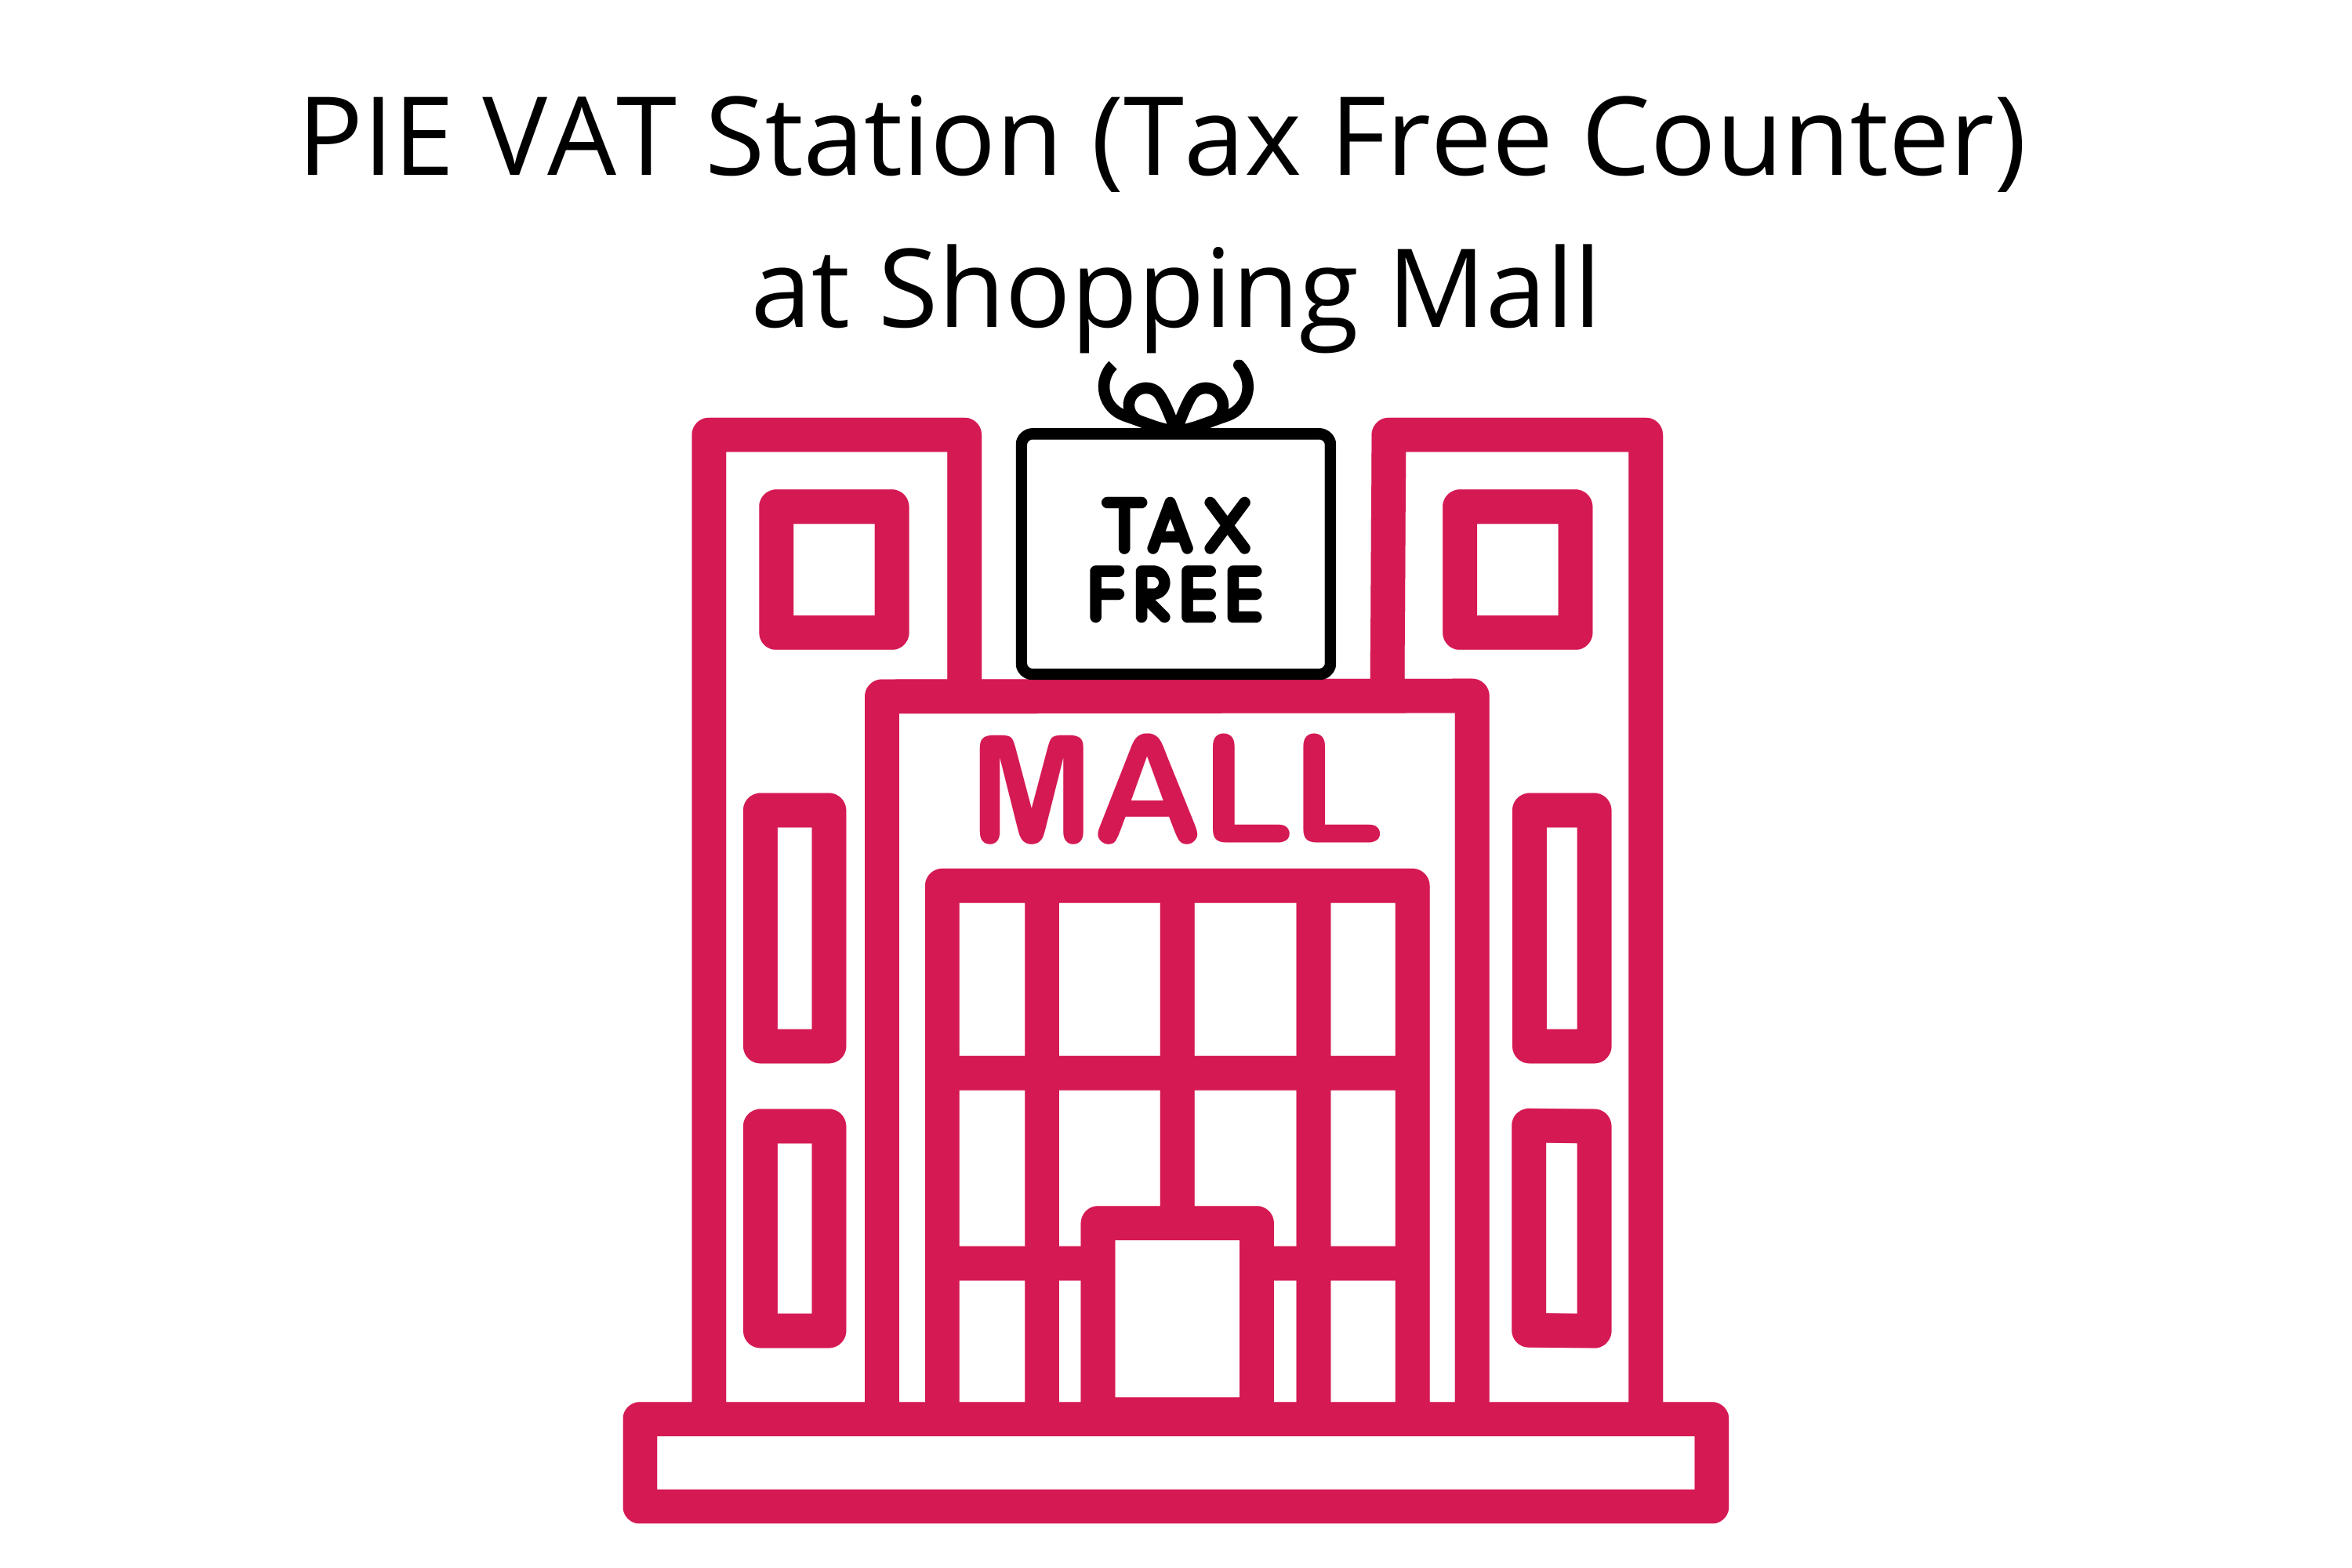 Tax free shopping at the shopping malls